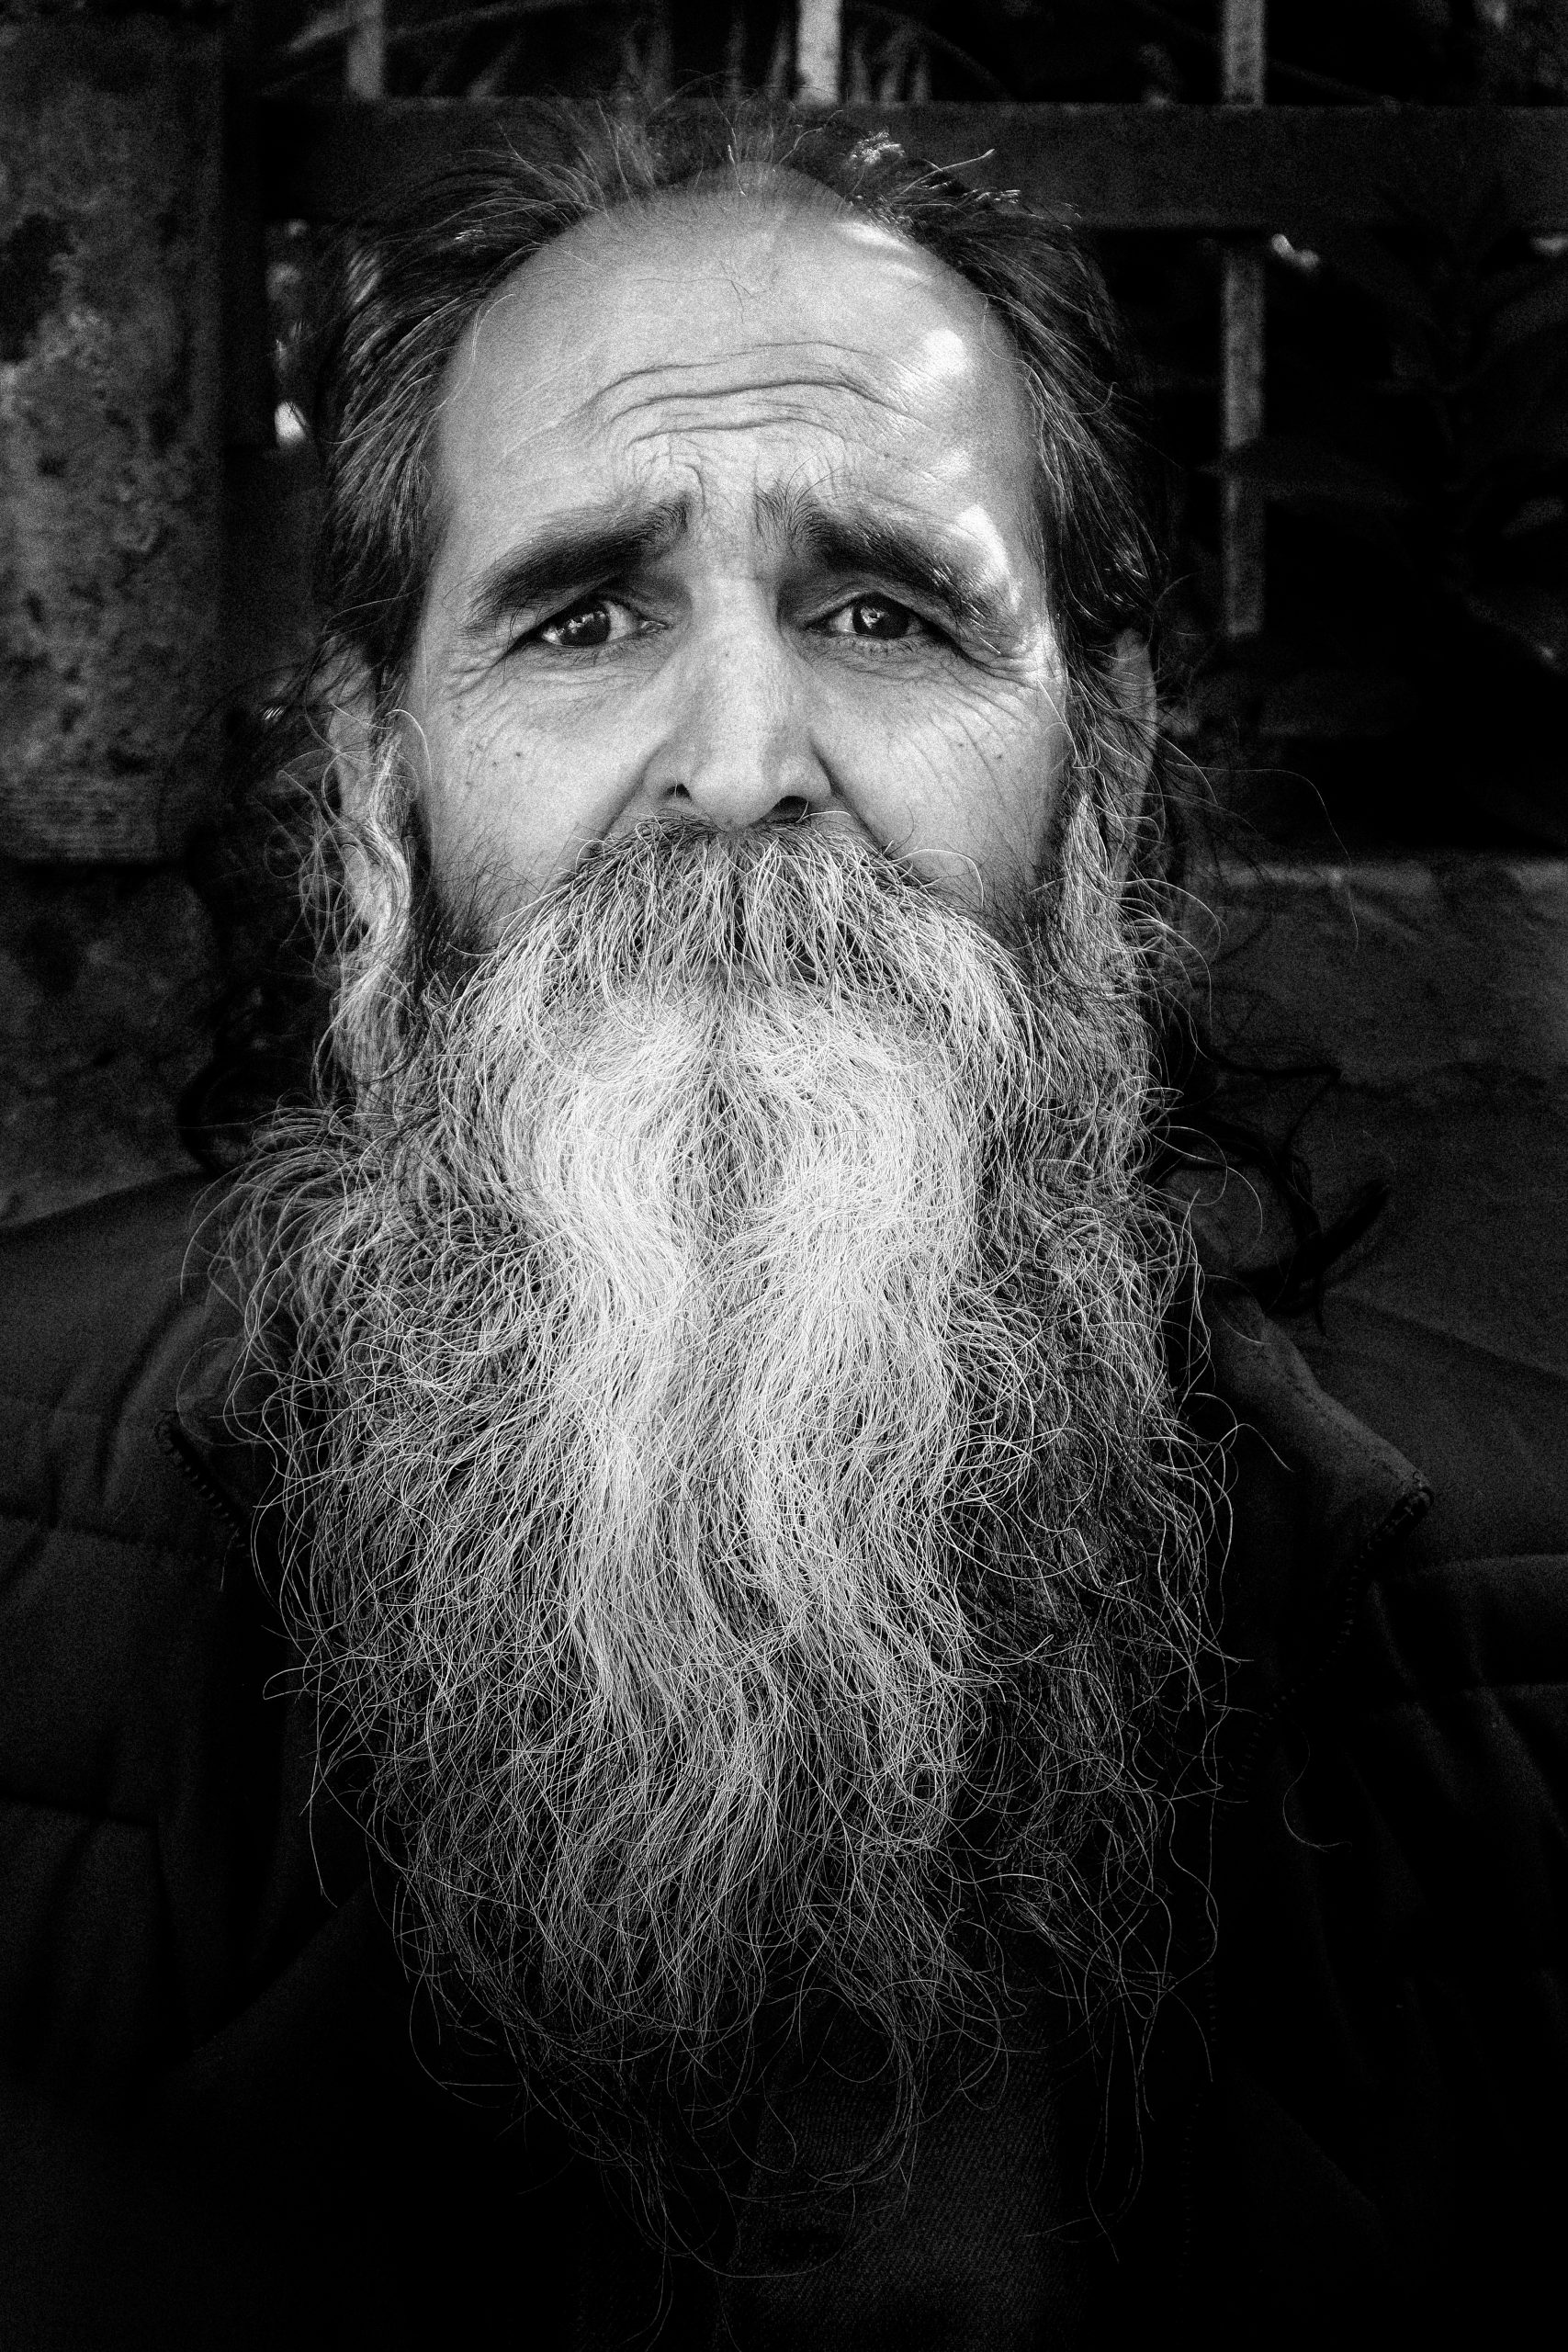 Old man with grey beard